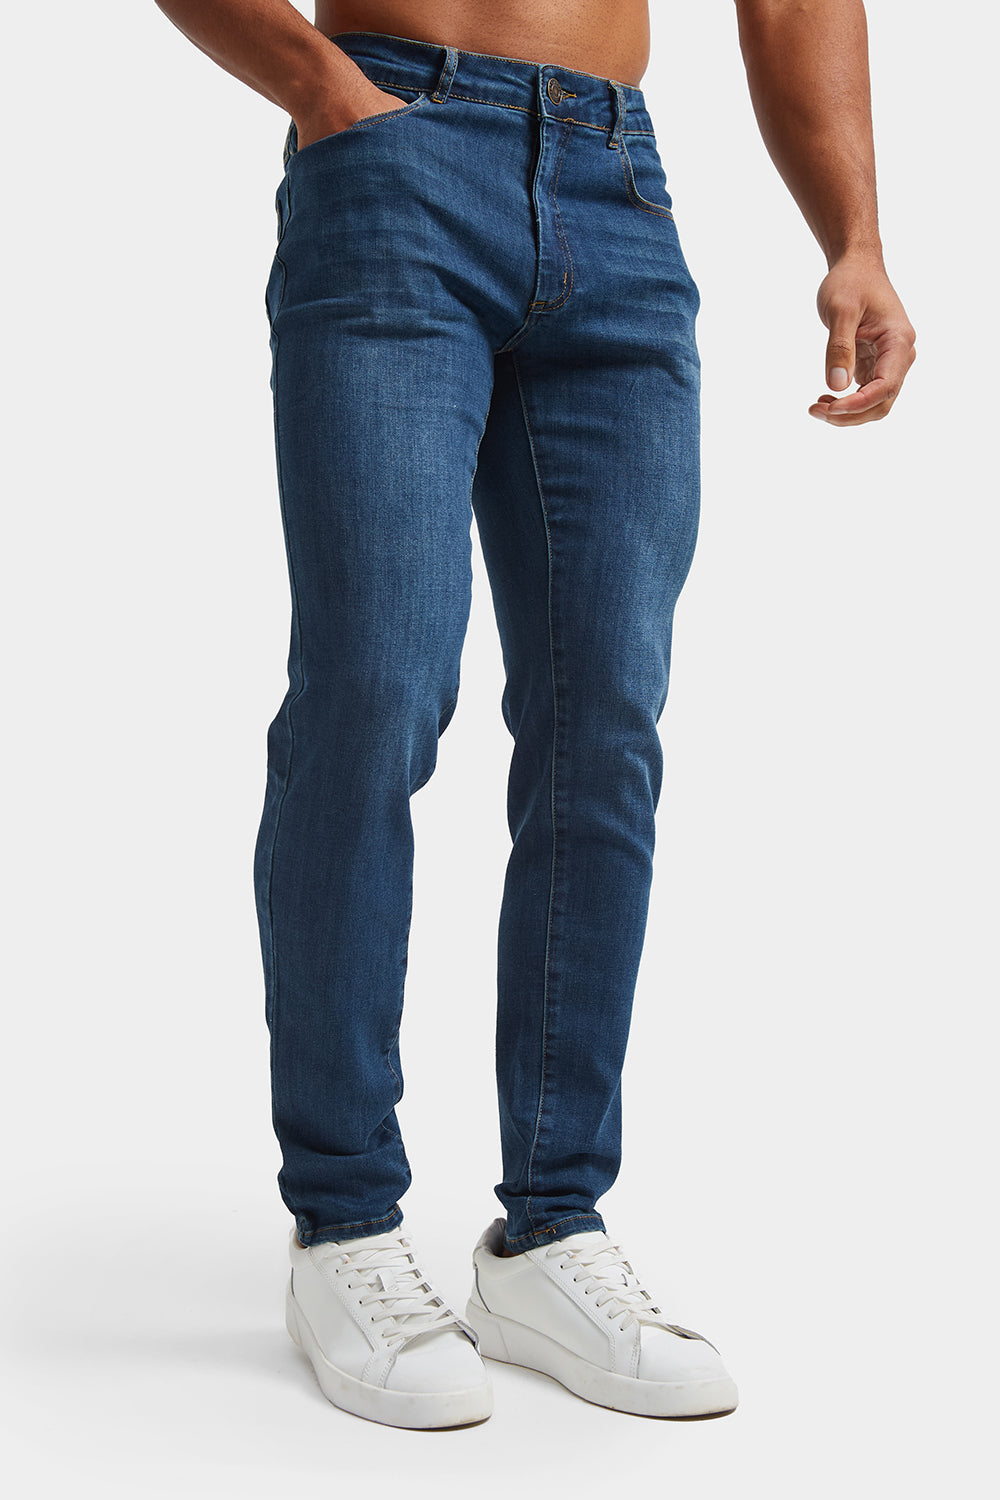 J13 slim fit comfort fleece denim jeans | ARMANI EXCHANGE Man